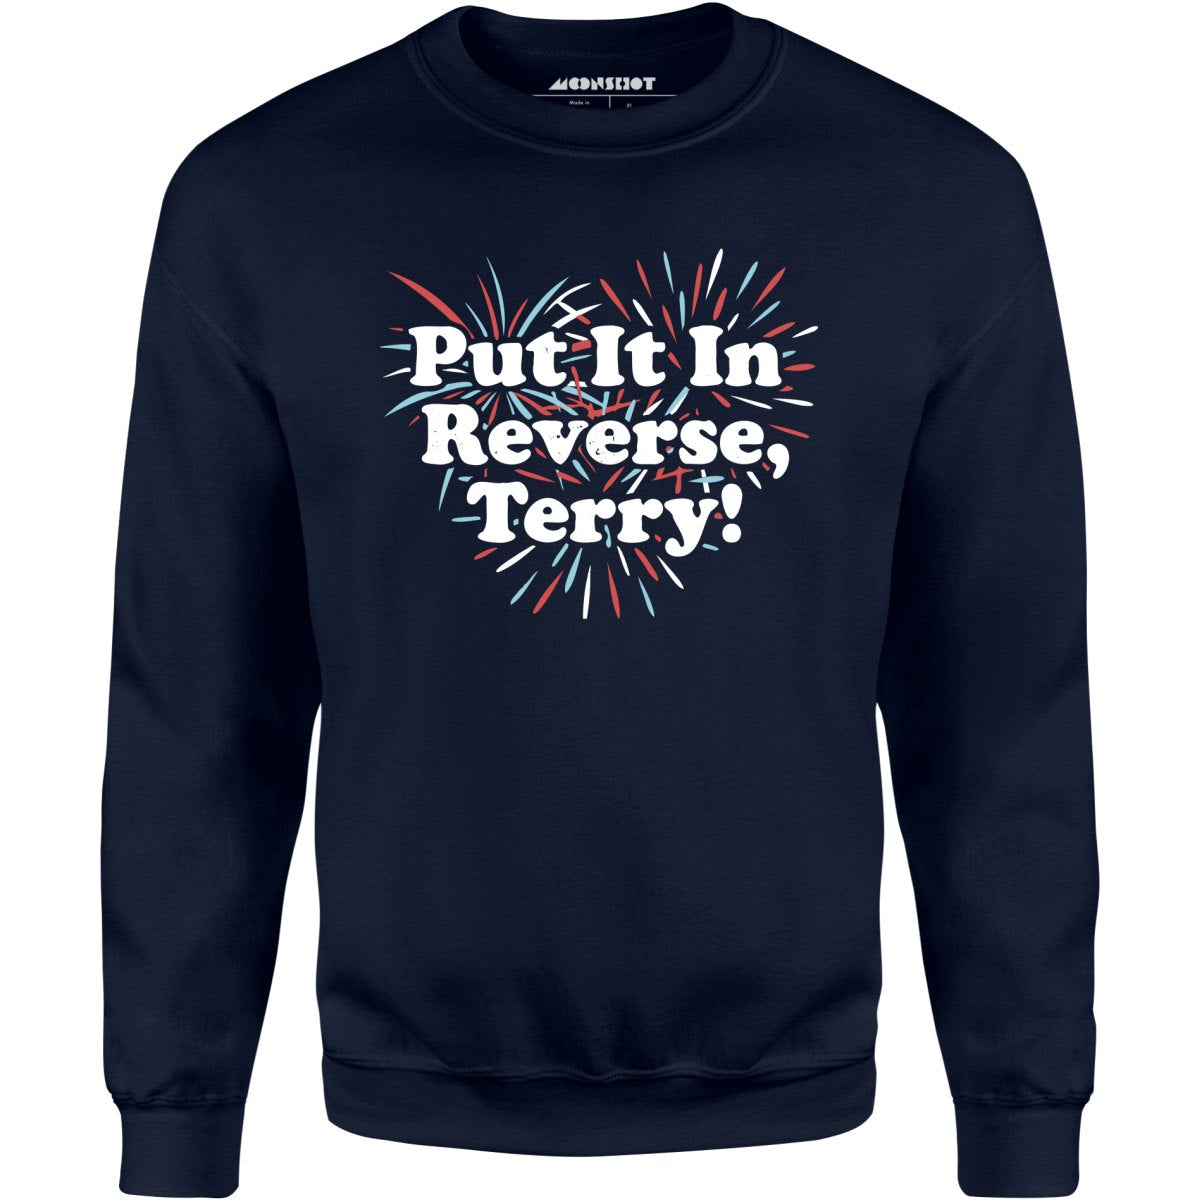 Put It In Reverse, Terry! - Unisex Sweatshirt